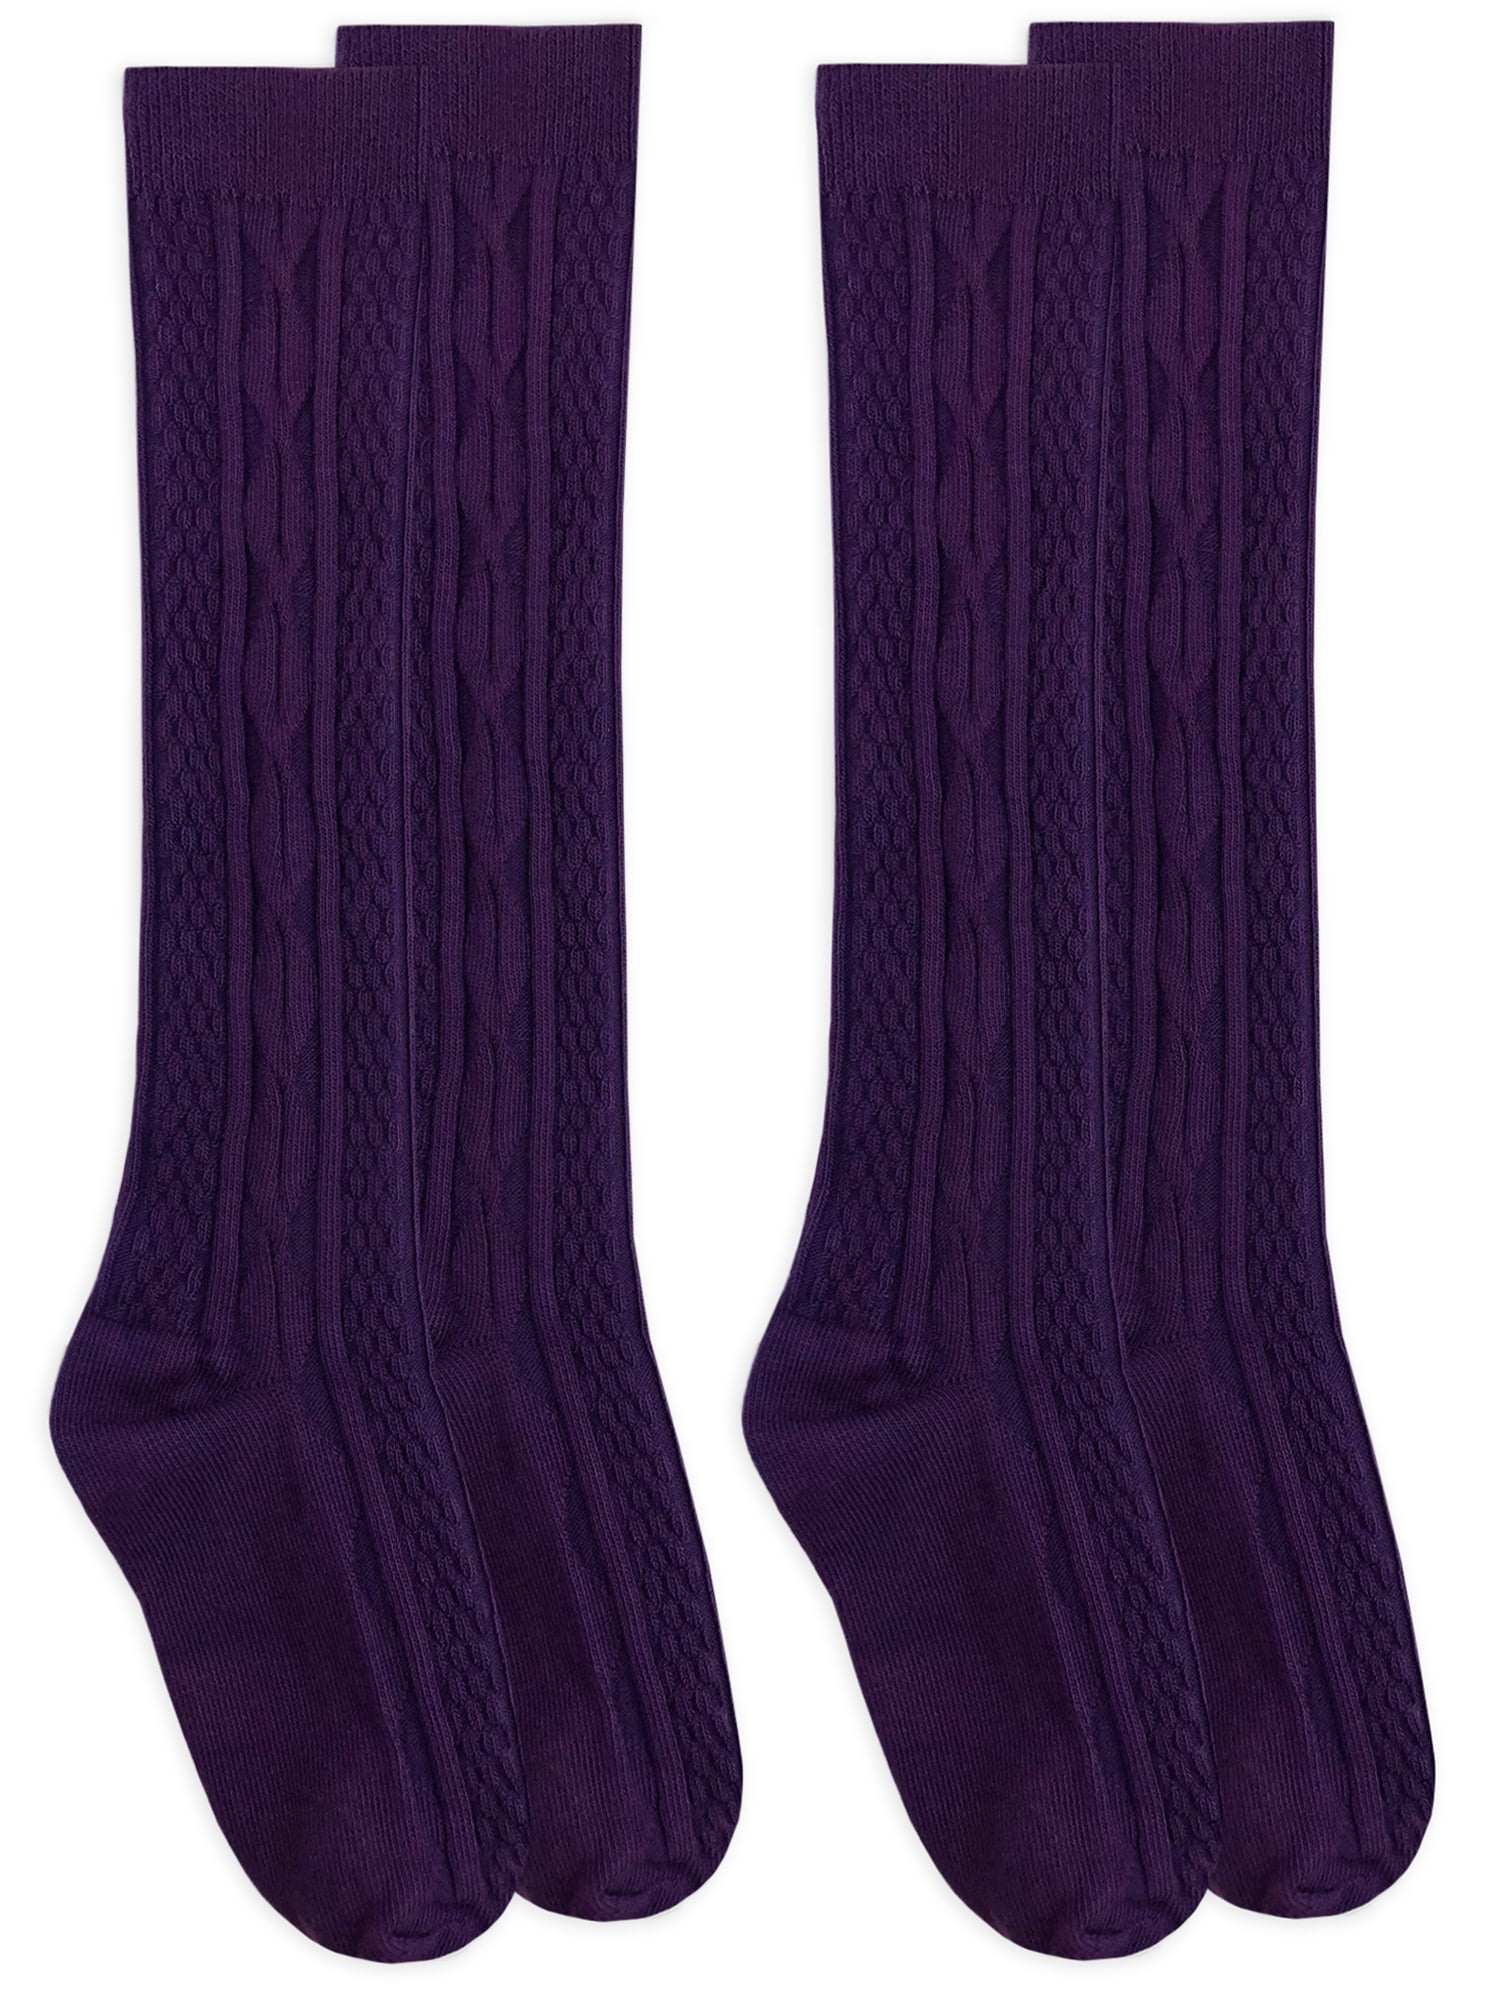 Jefferies Socks Over the Knee High Socks Ribbed Purple Charcoal Chocolate 